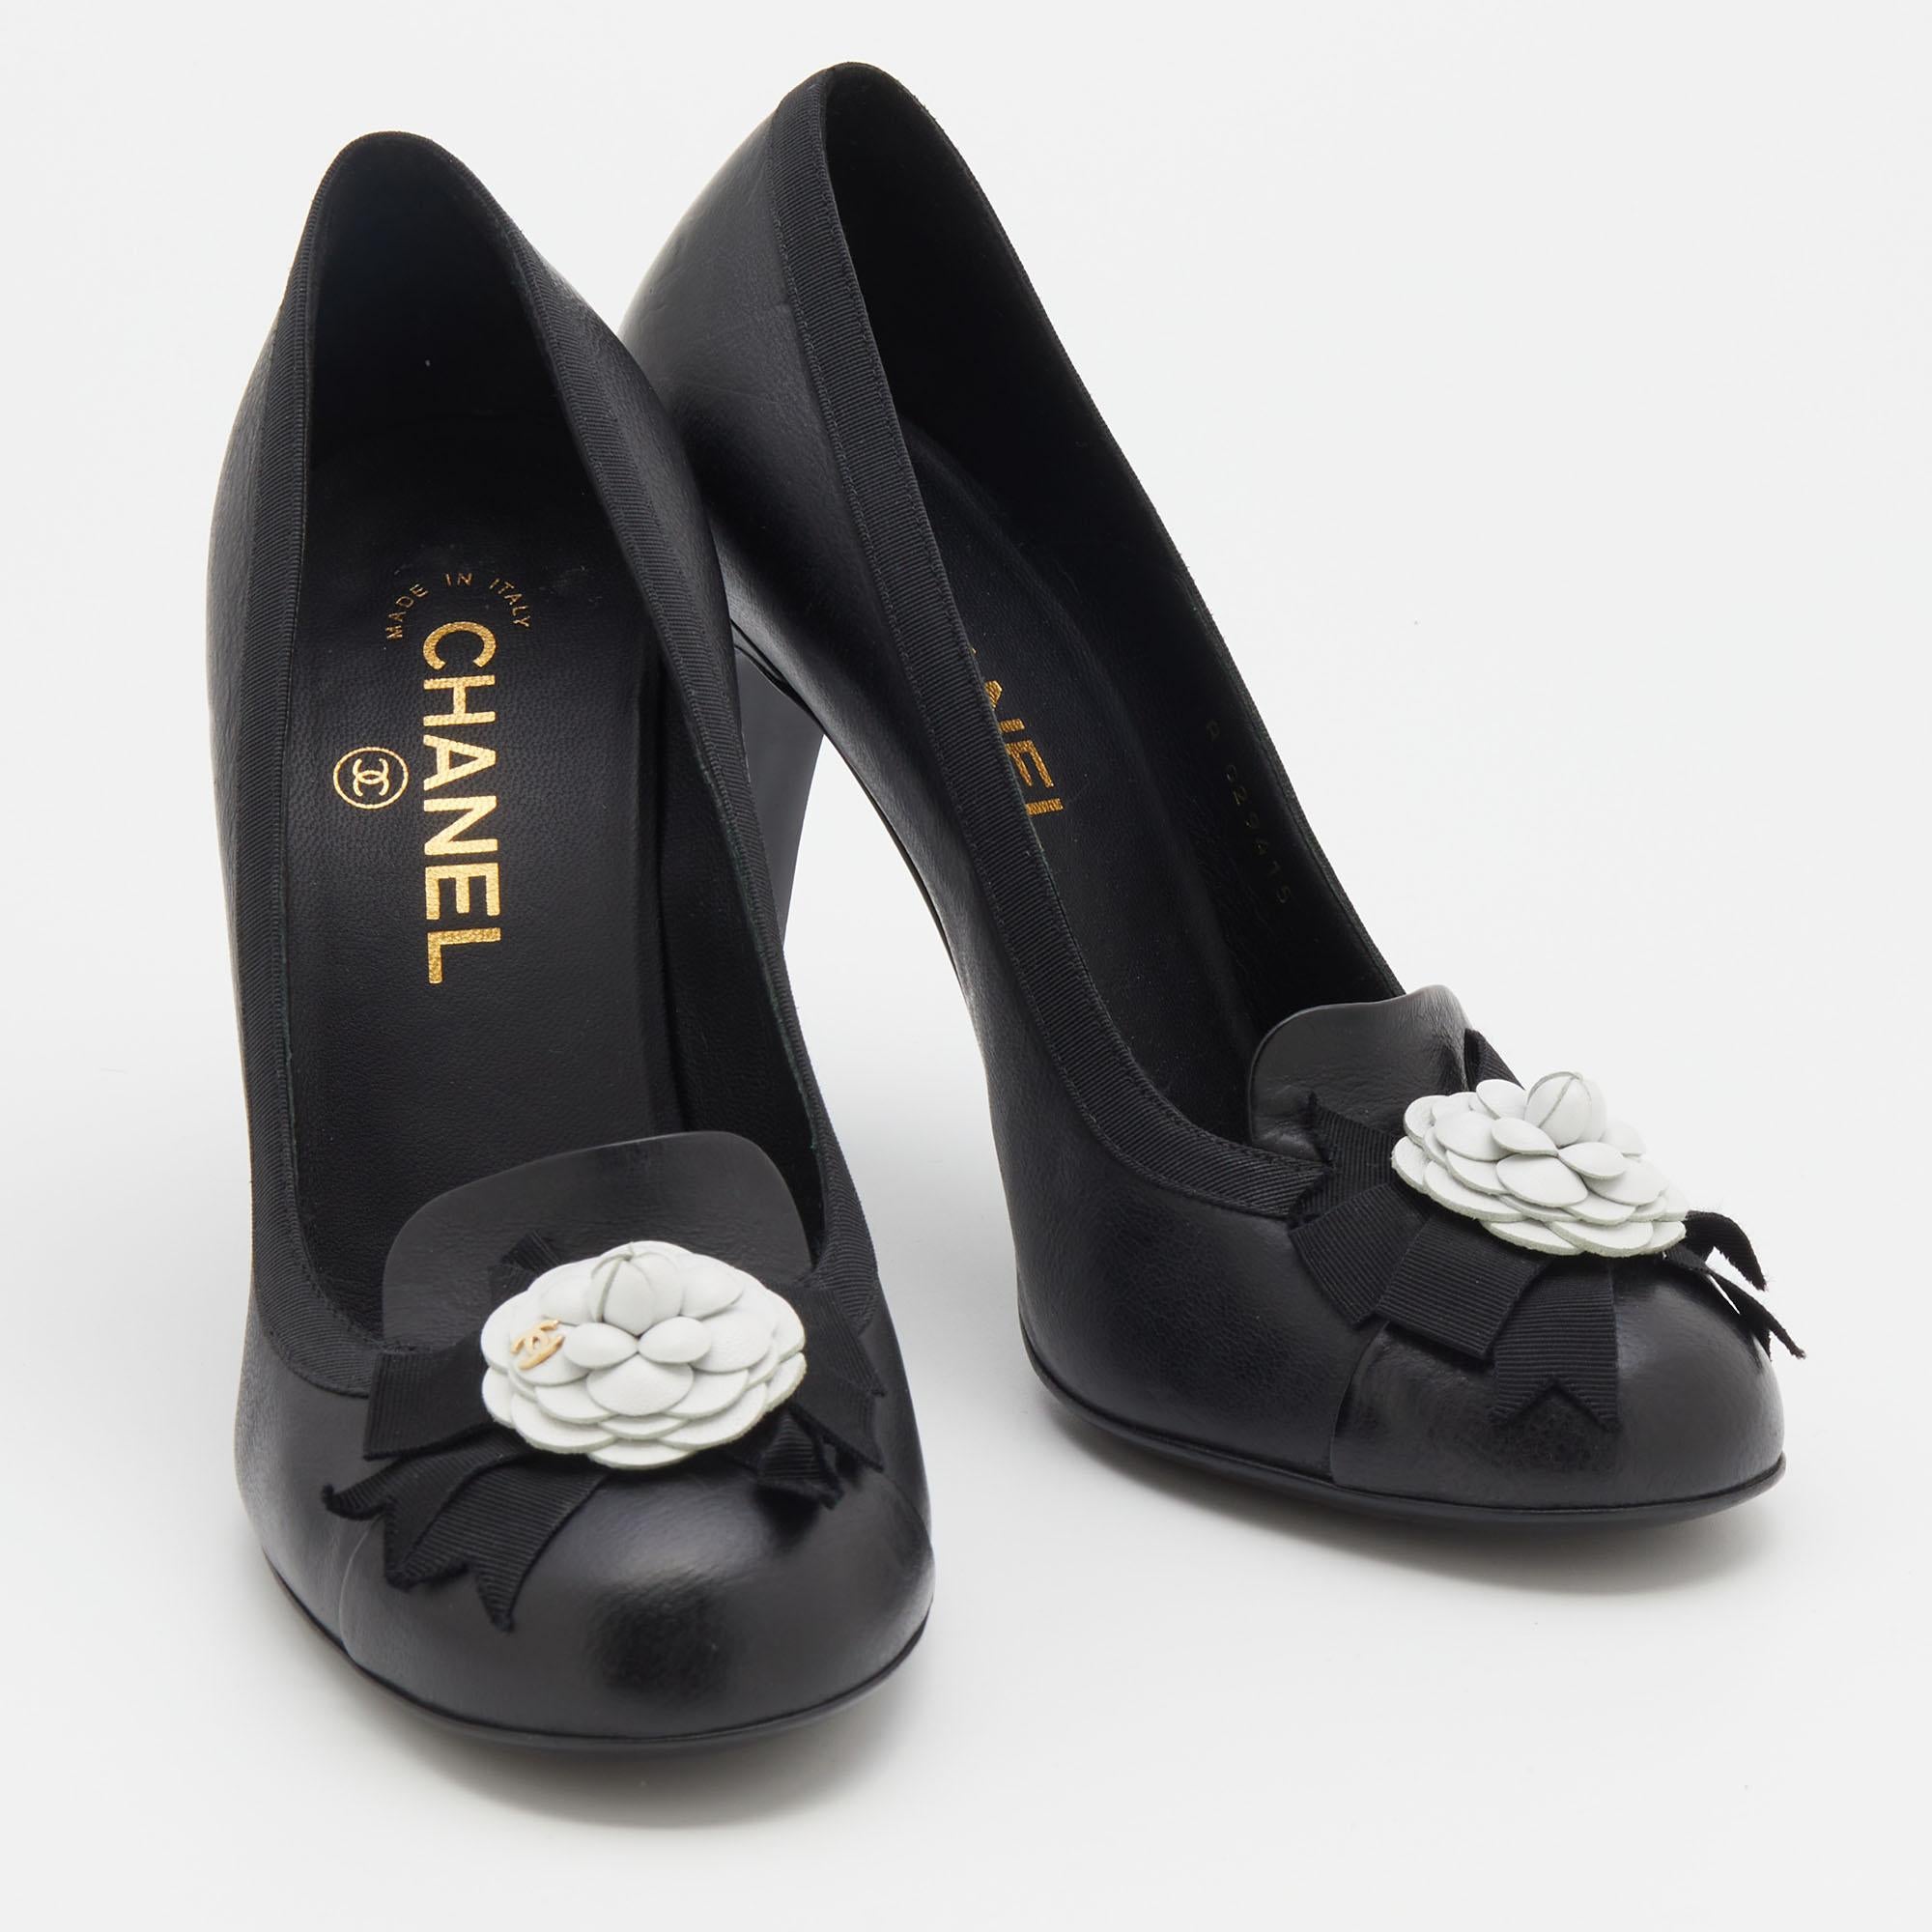 Chanel Black/White Leather Camellia CC Pumps Size 38 1